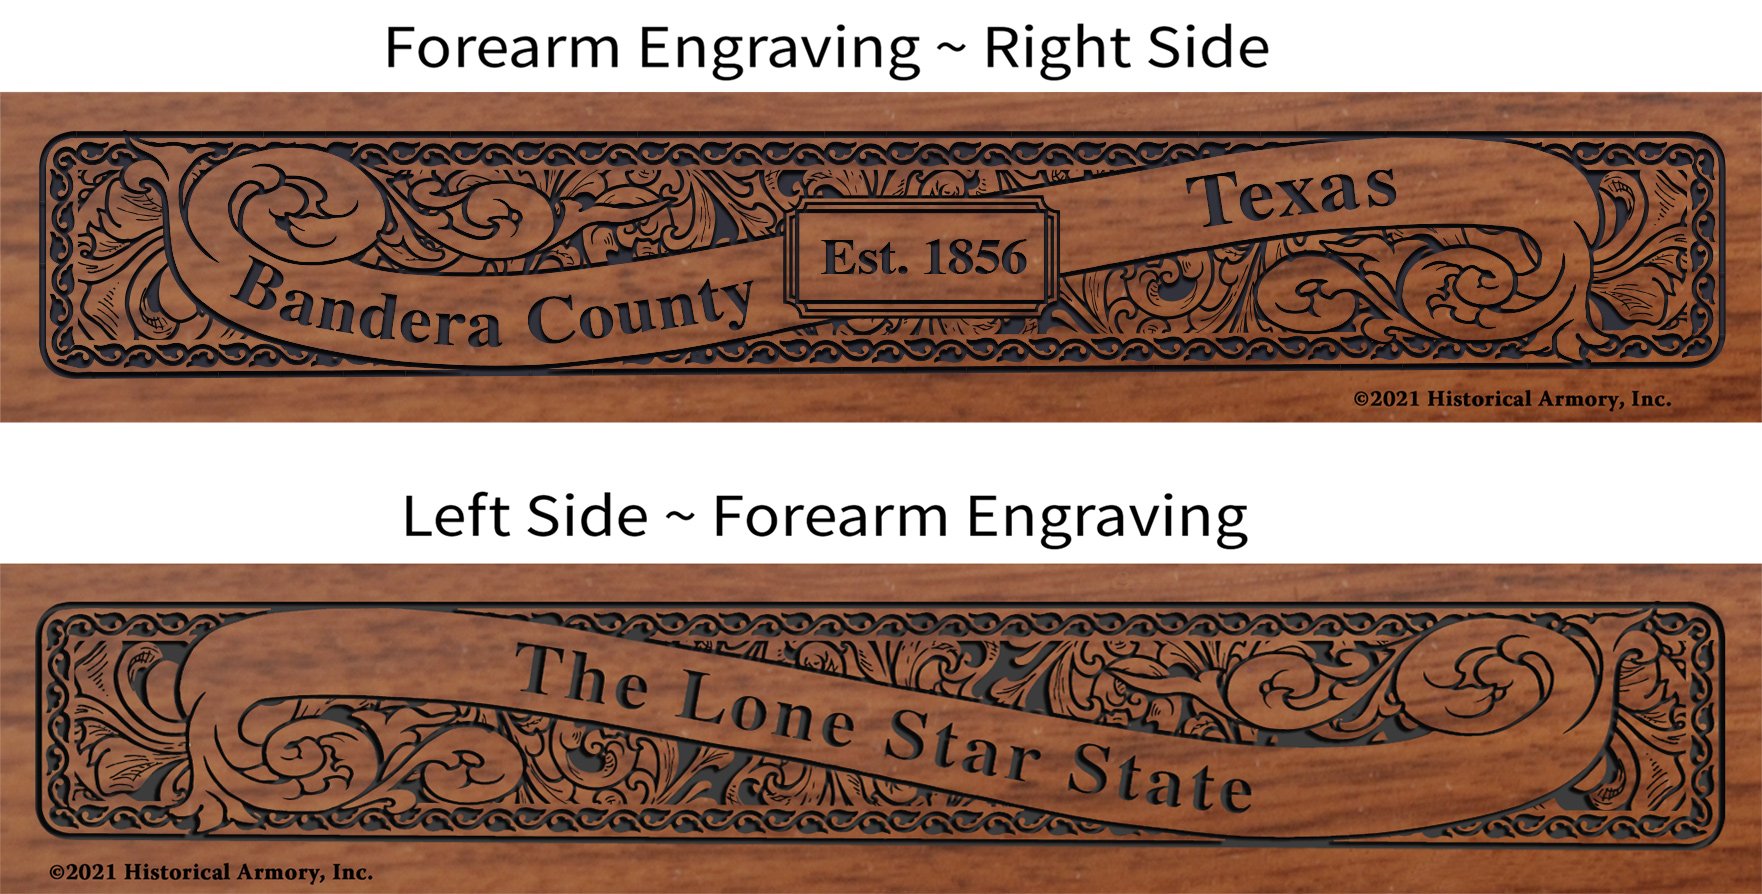 Bandera County Texas Establishment and Motto History Engraved Rifle Forearm